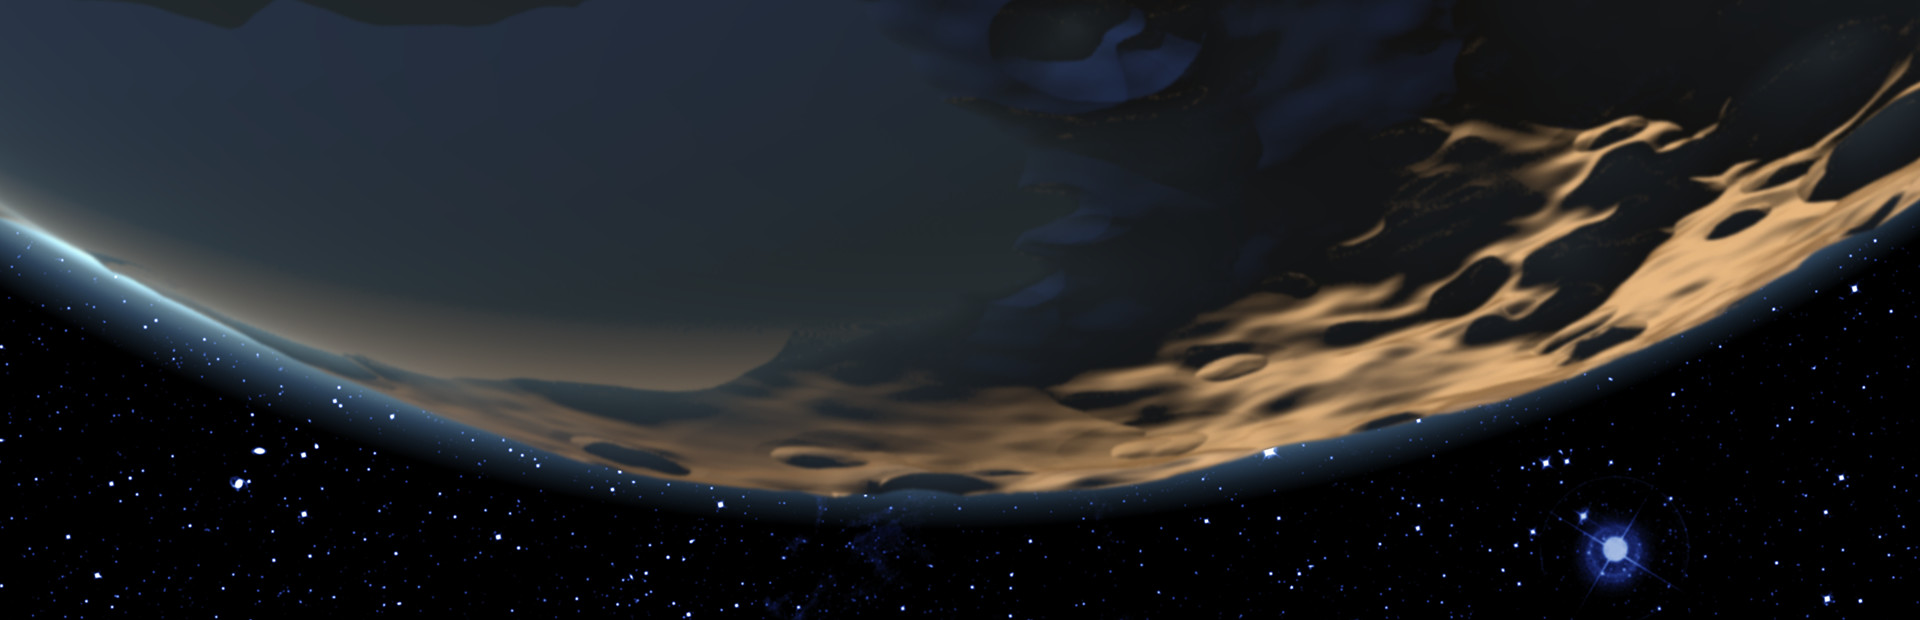 Infinite Space III: Sea of Stars cover image